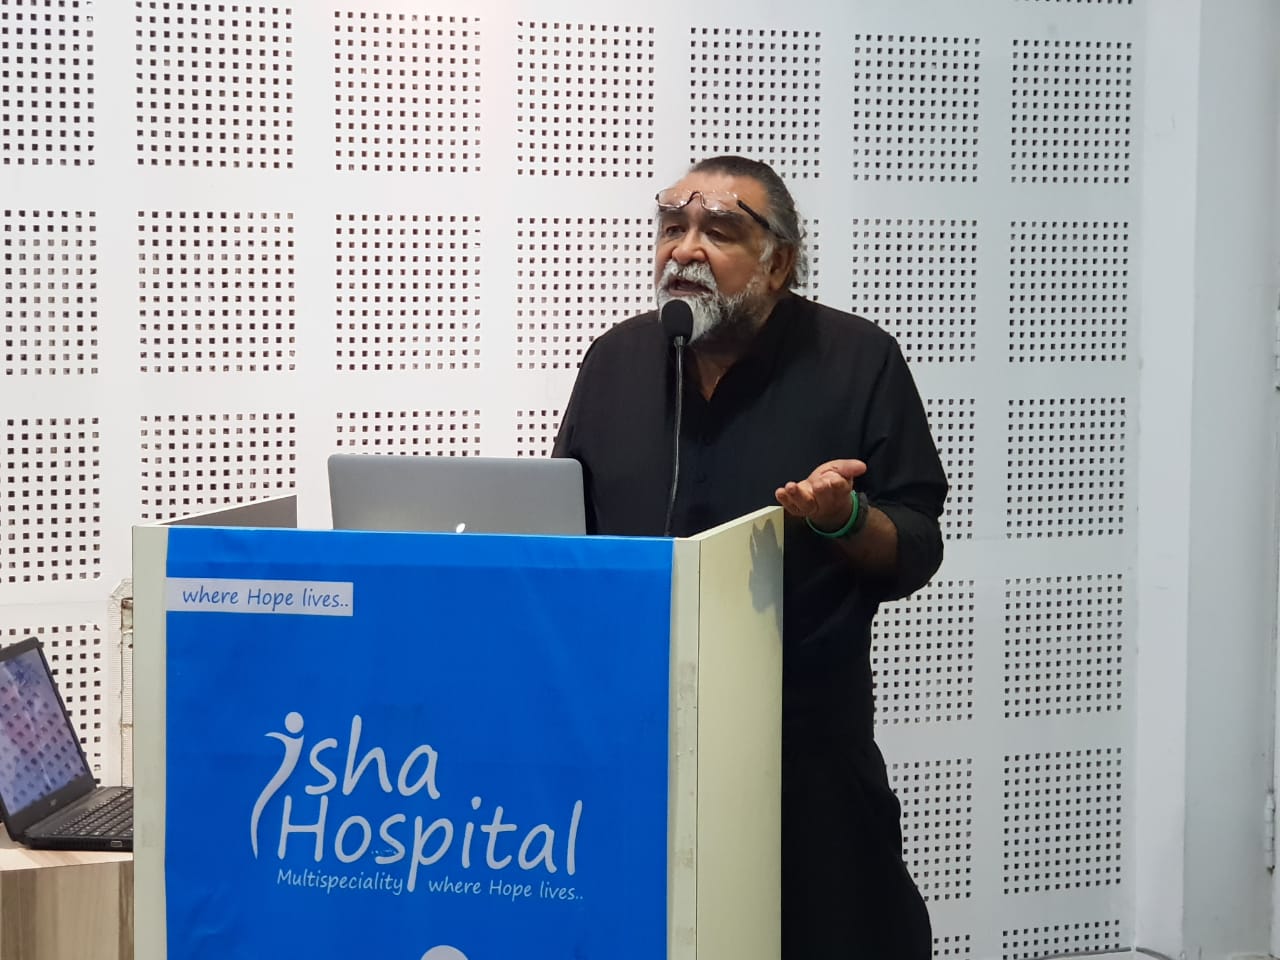 Isha hospital introduce department of Oncology inagurated by Ad Guru Prahalad Kakkar